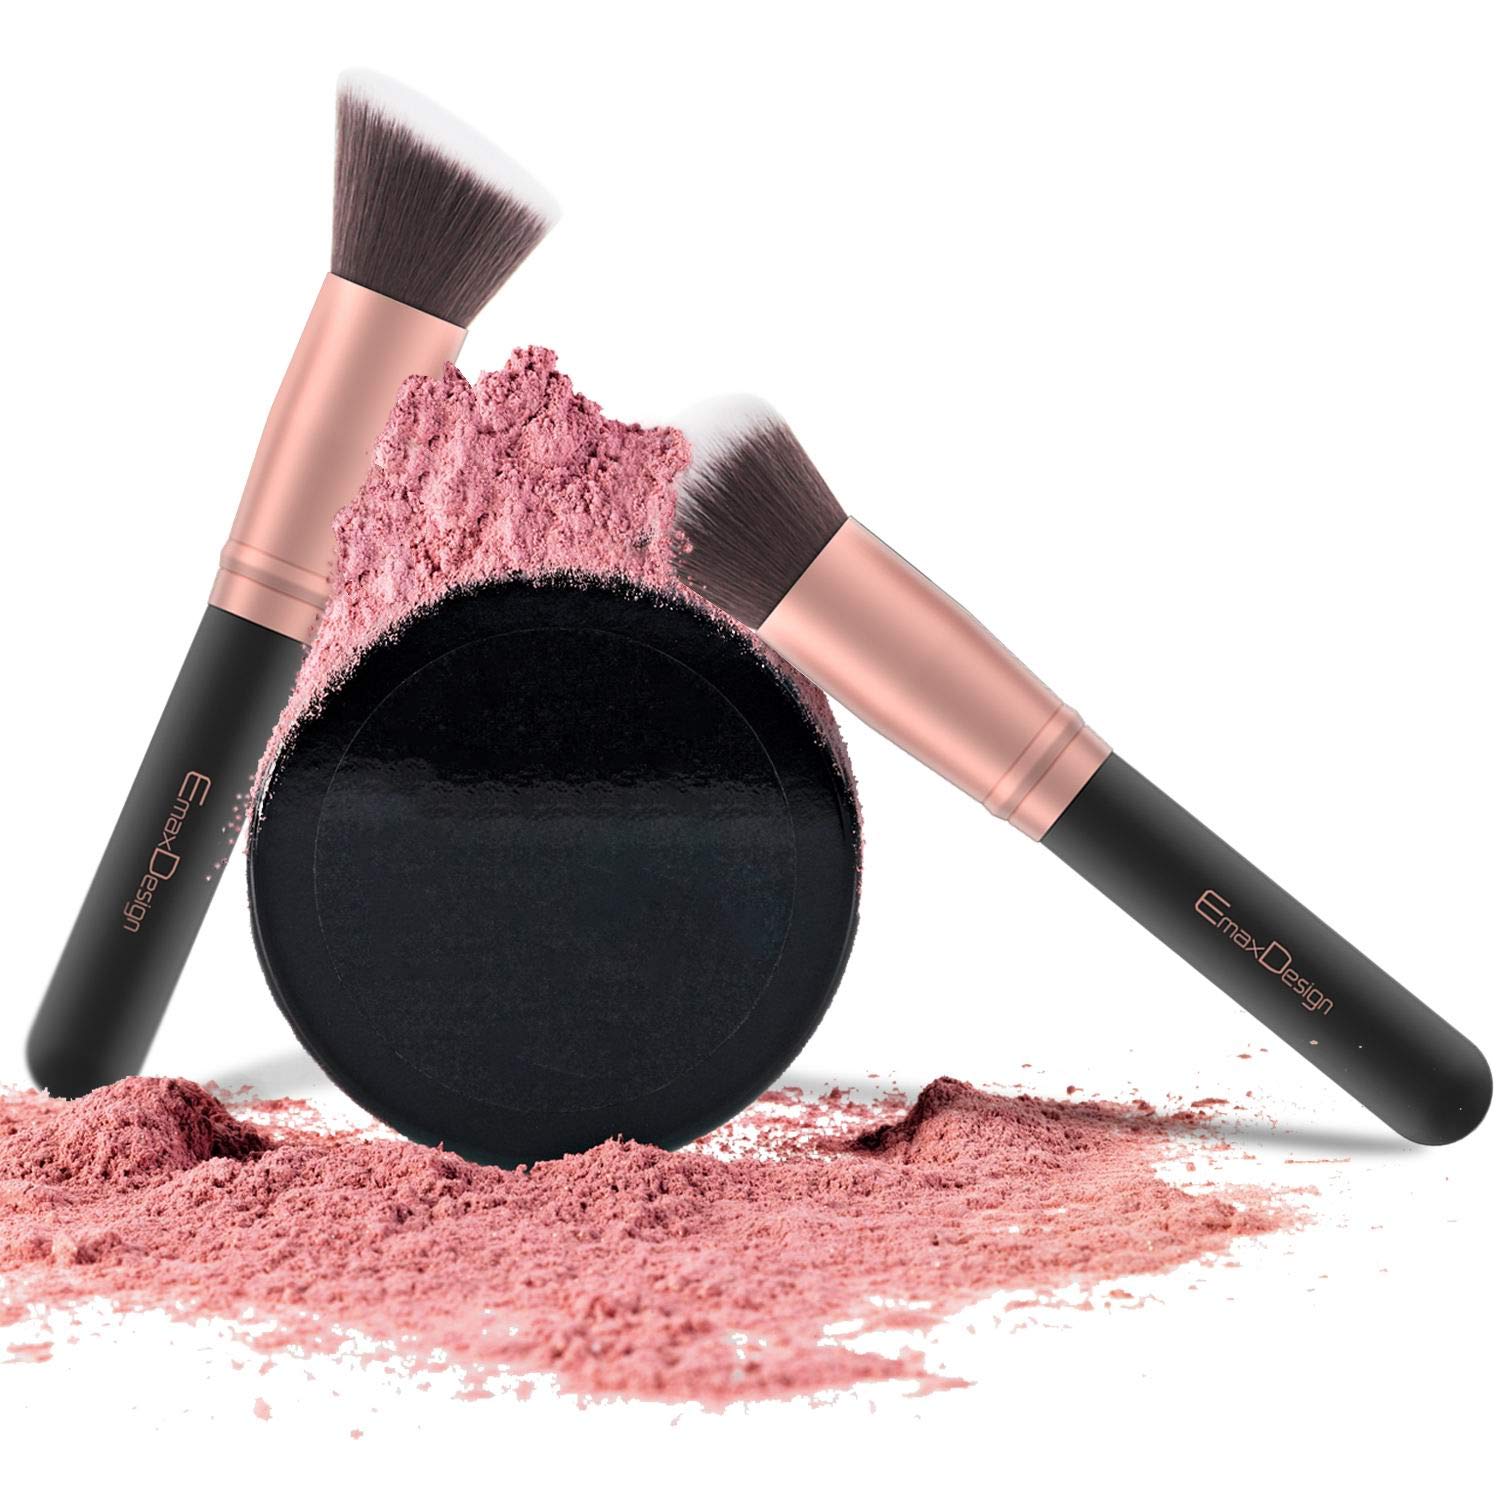 EmaxDesign Makeup Brushes 17 Pieces Premium Synthetic Foundation Brush Powder Blending Blush Concealer Eye Face Liquid Powder Cream Cosmetics Brushes Kit (Rose Gold)